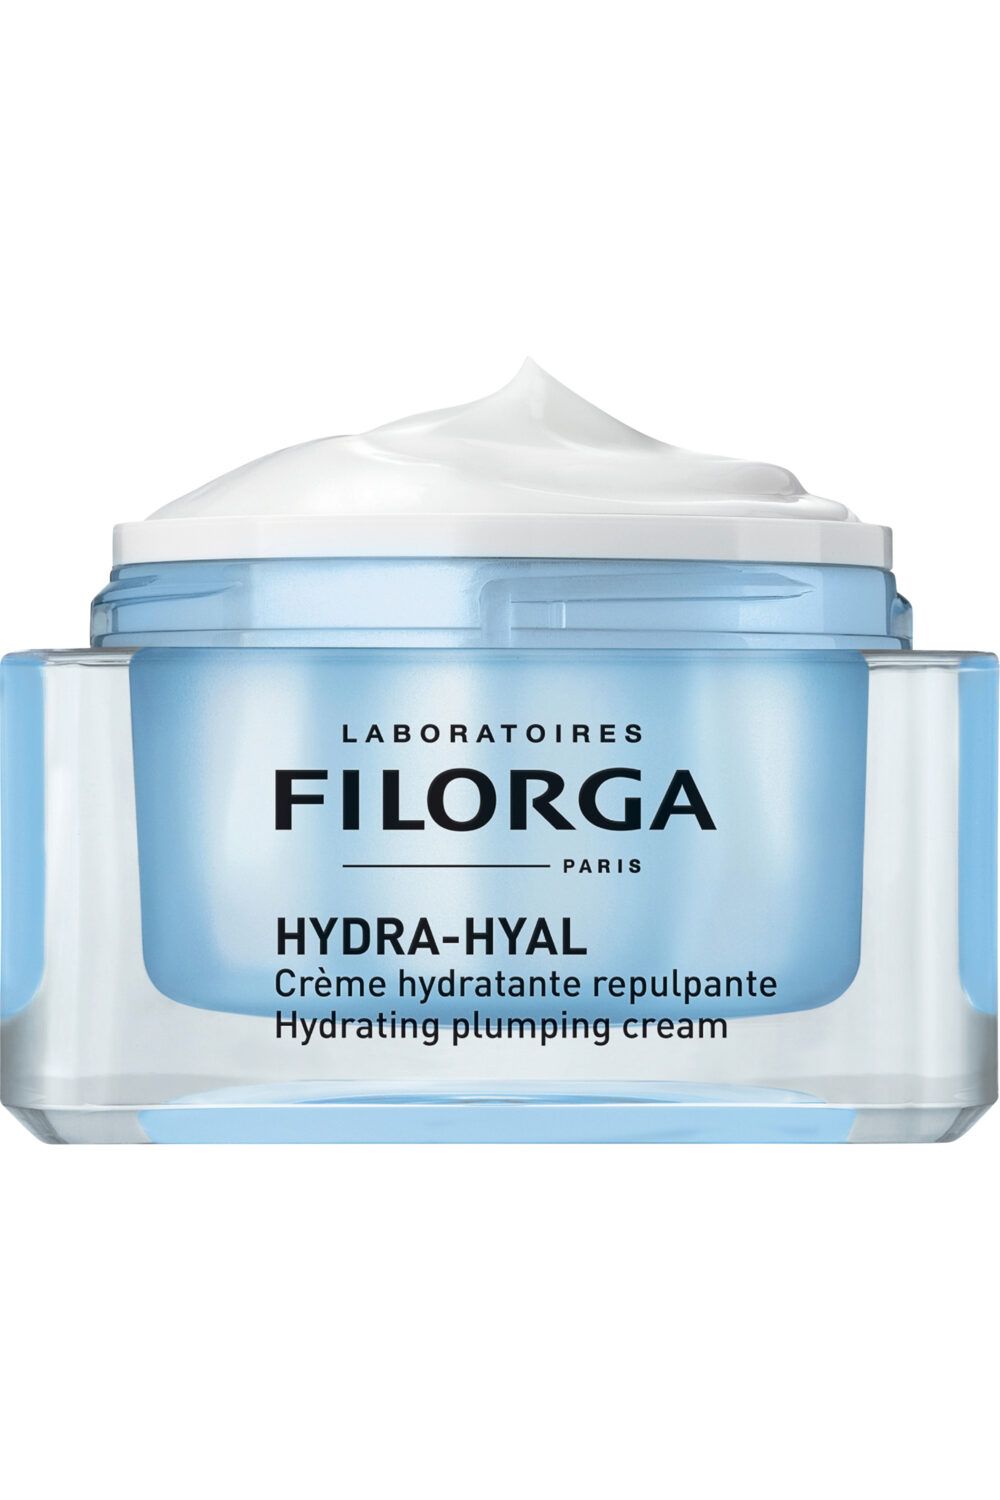 Filorga - Crème hydratante & repulpante Hydra-Hyal